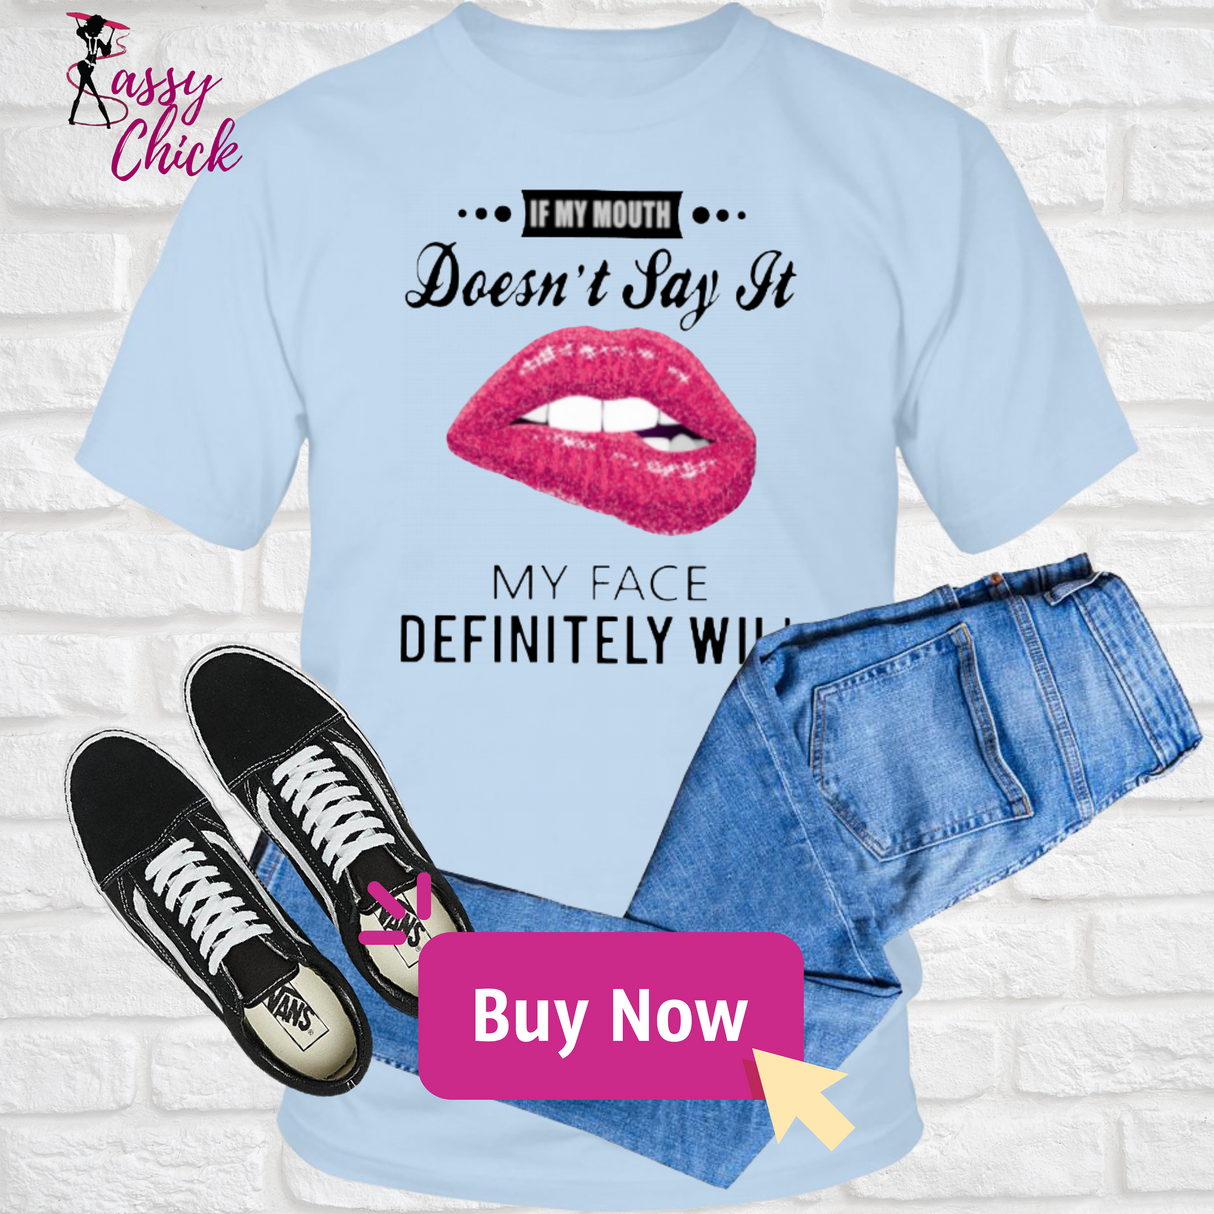 DSI Lips T-Shirt